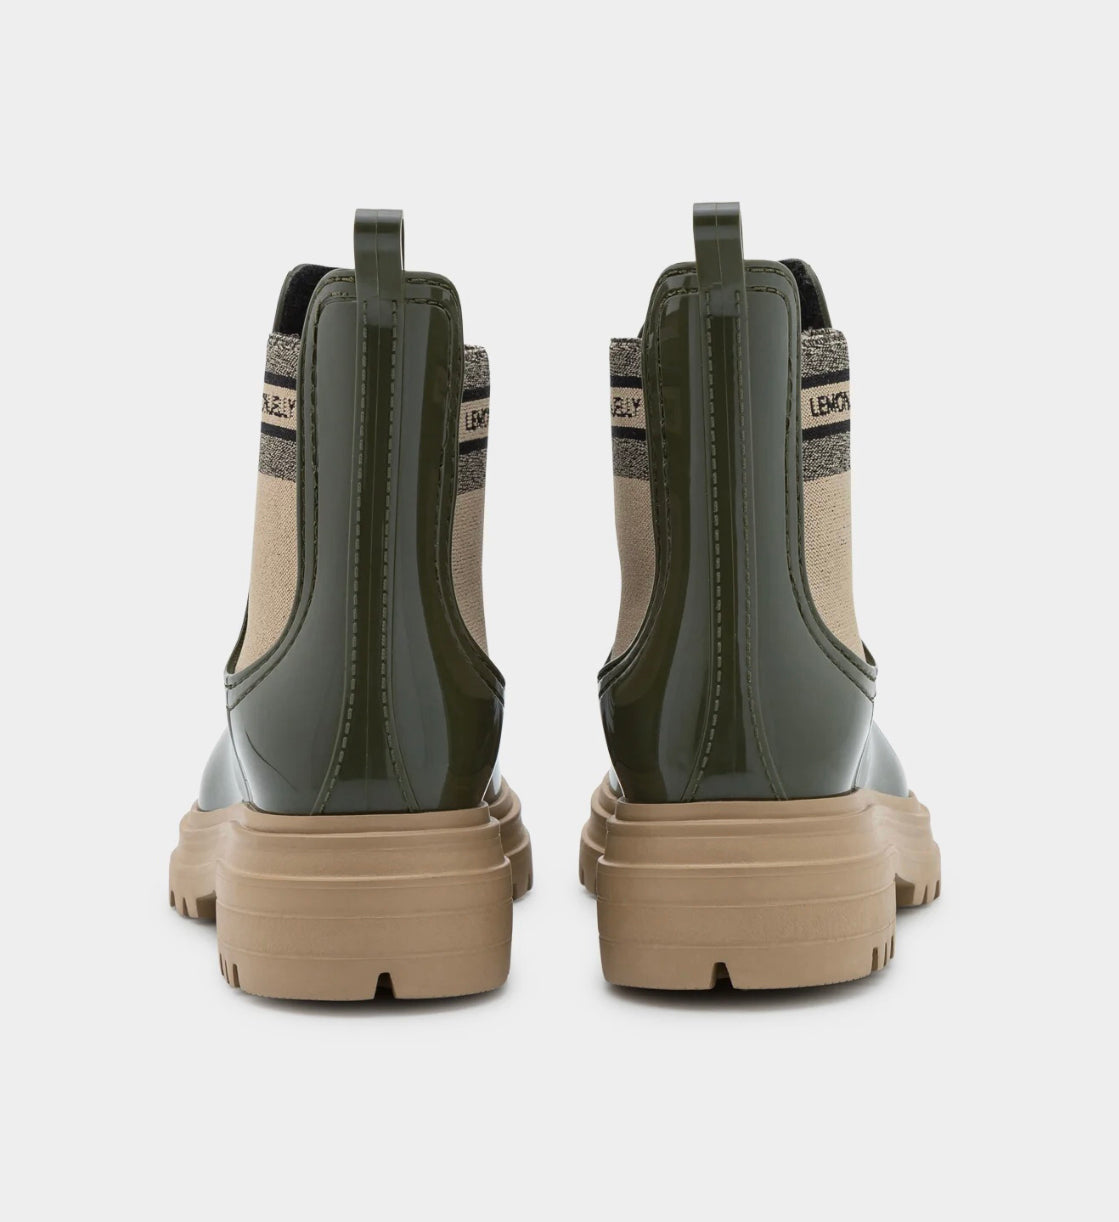 Lemon Jelly Flow 02 Military Green Chelsea Ankle Vegan Rain Boots Made In Portugal